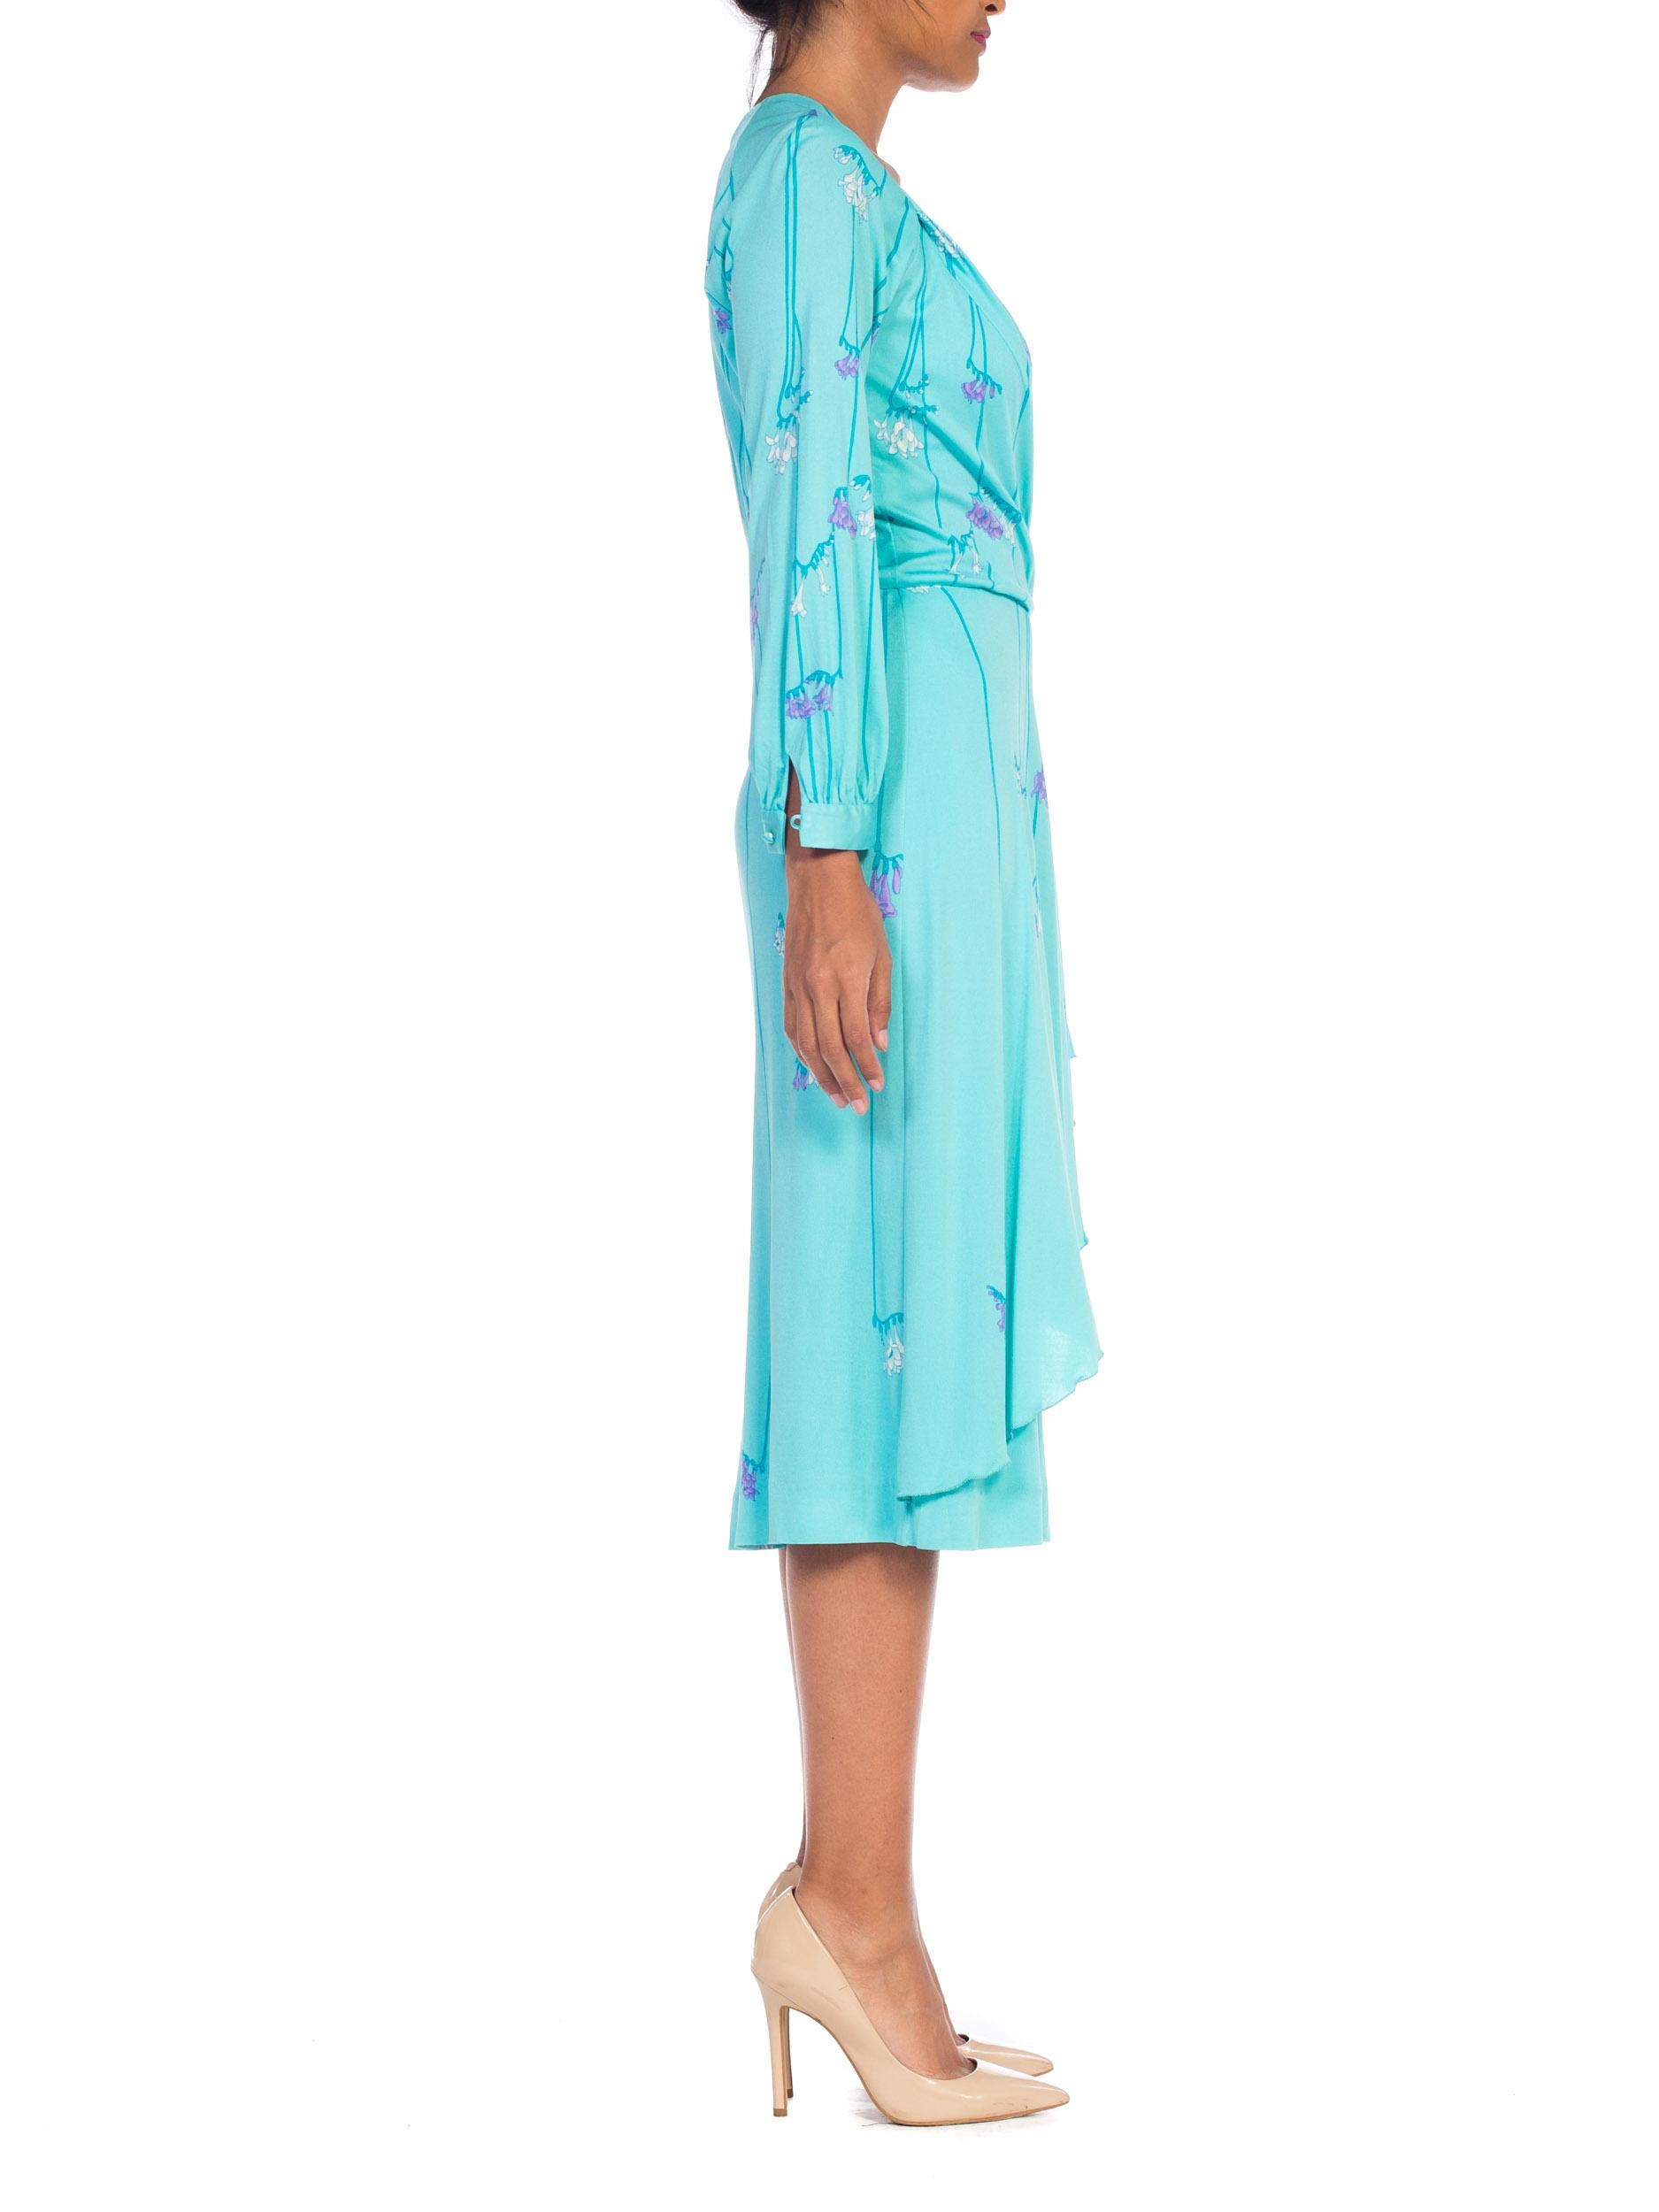 1970S DE PARISINI Aqua  Blue Silk Jersey Floral Dress Made In Italy For Sale 4